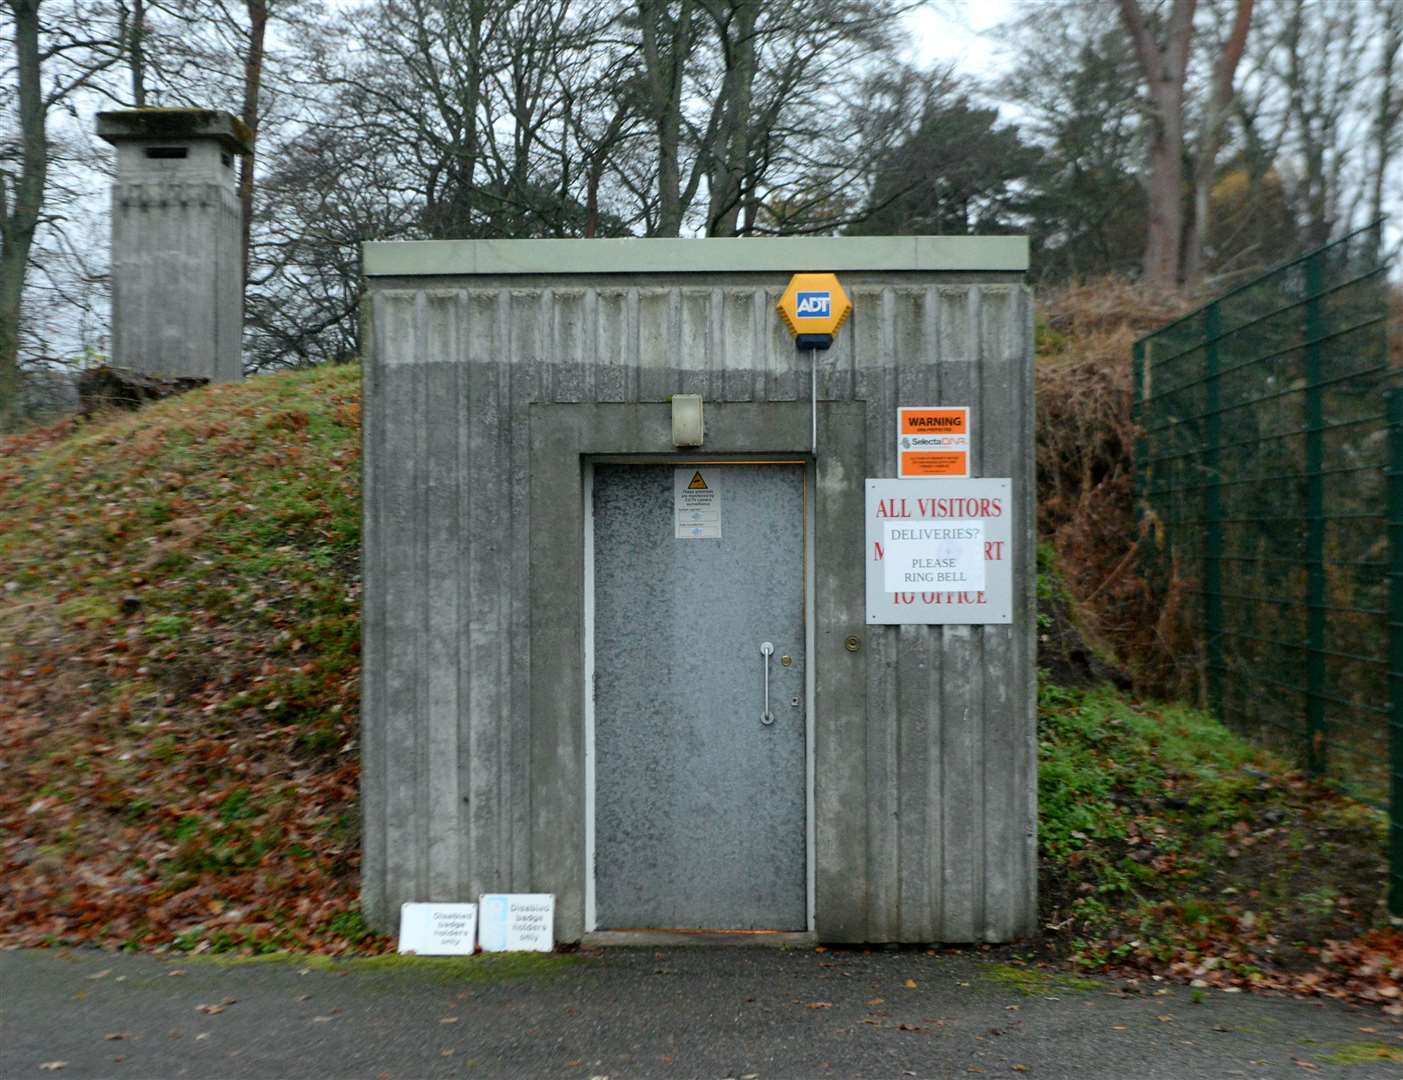 The bunker entrance.